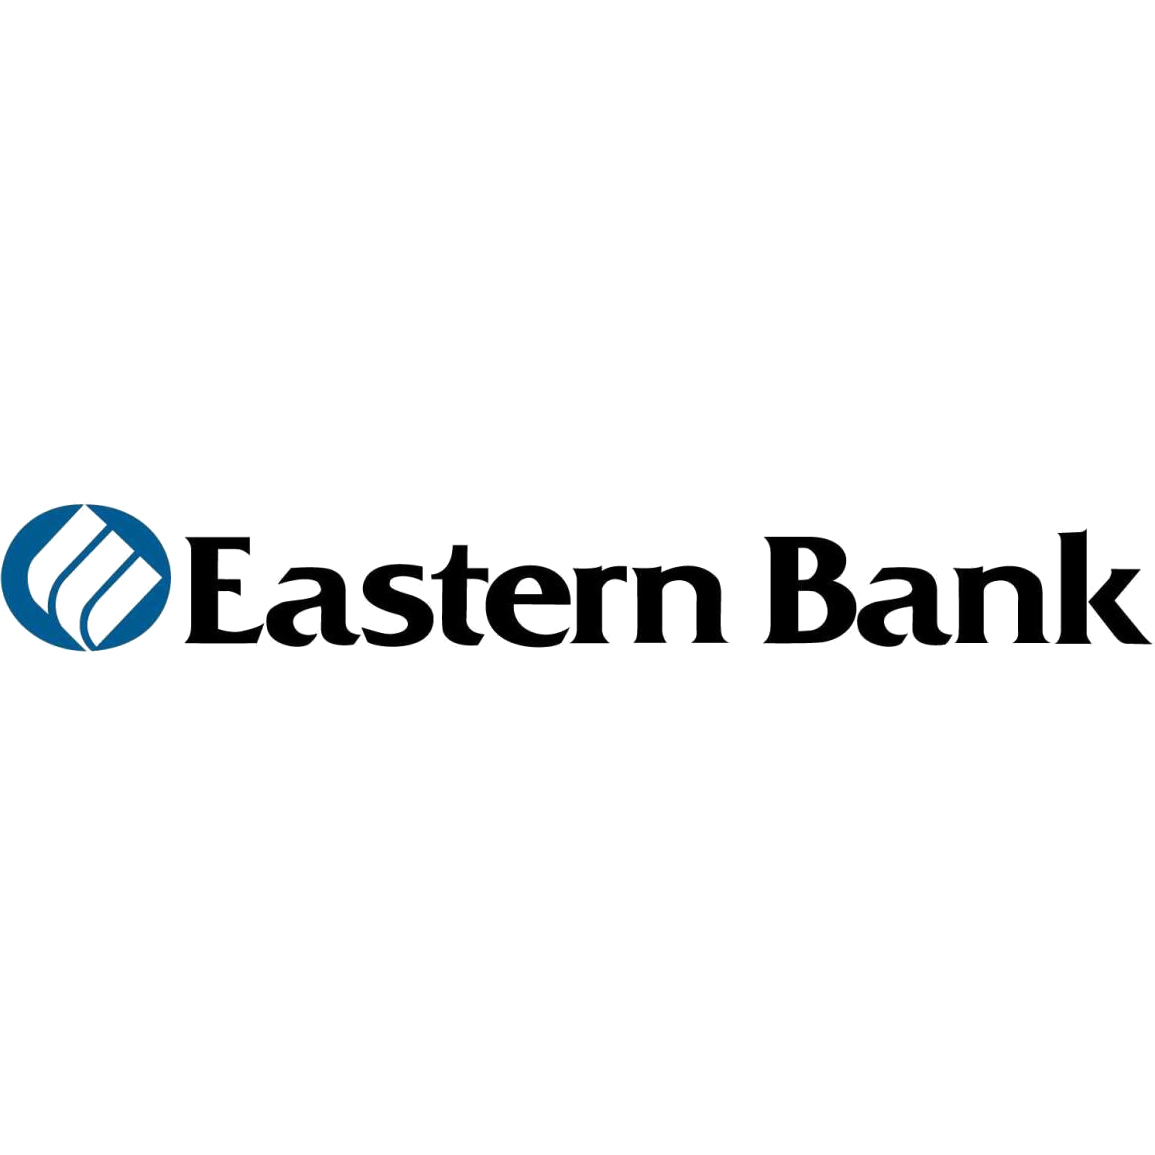 Eastern Bank website